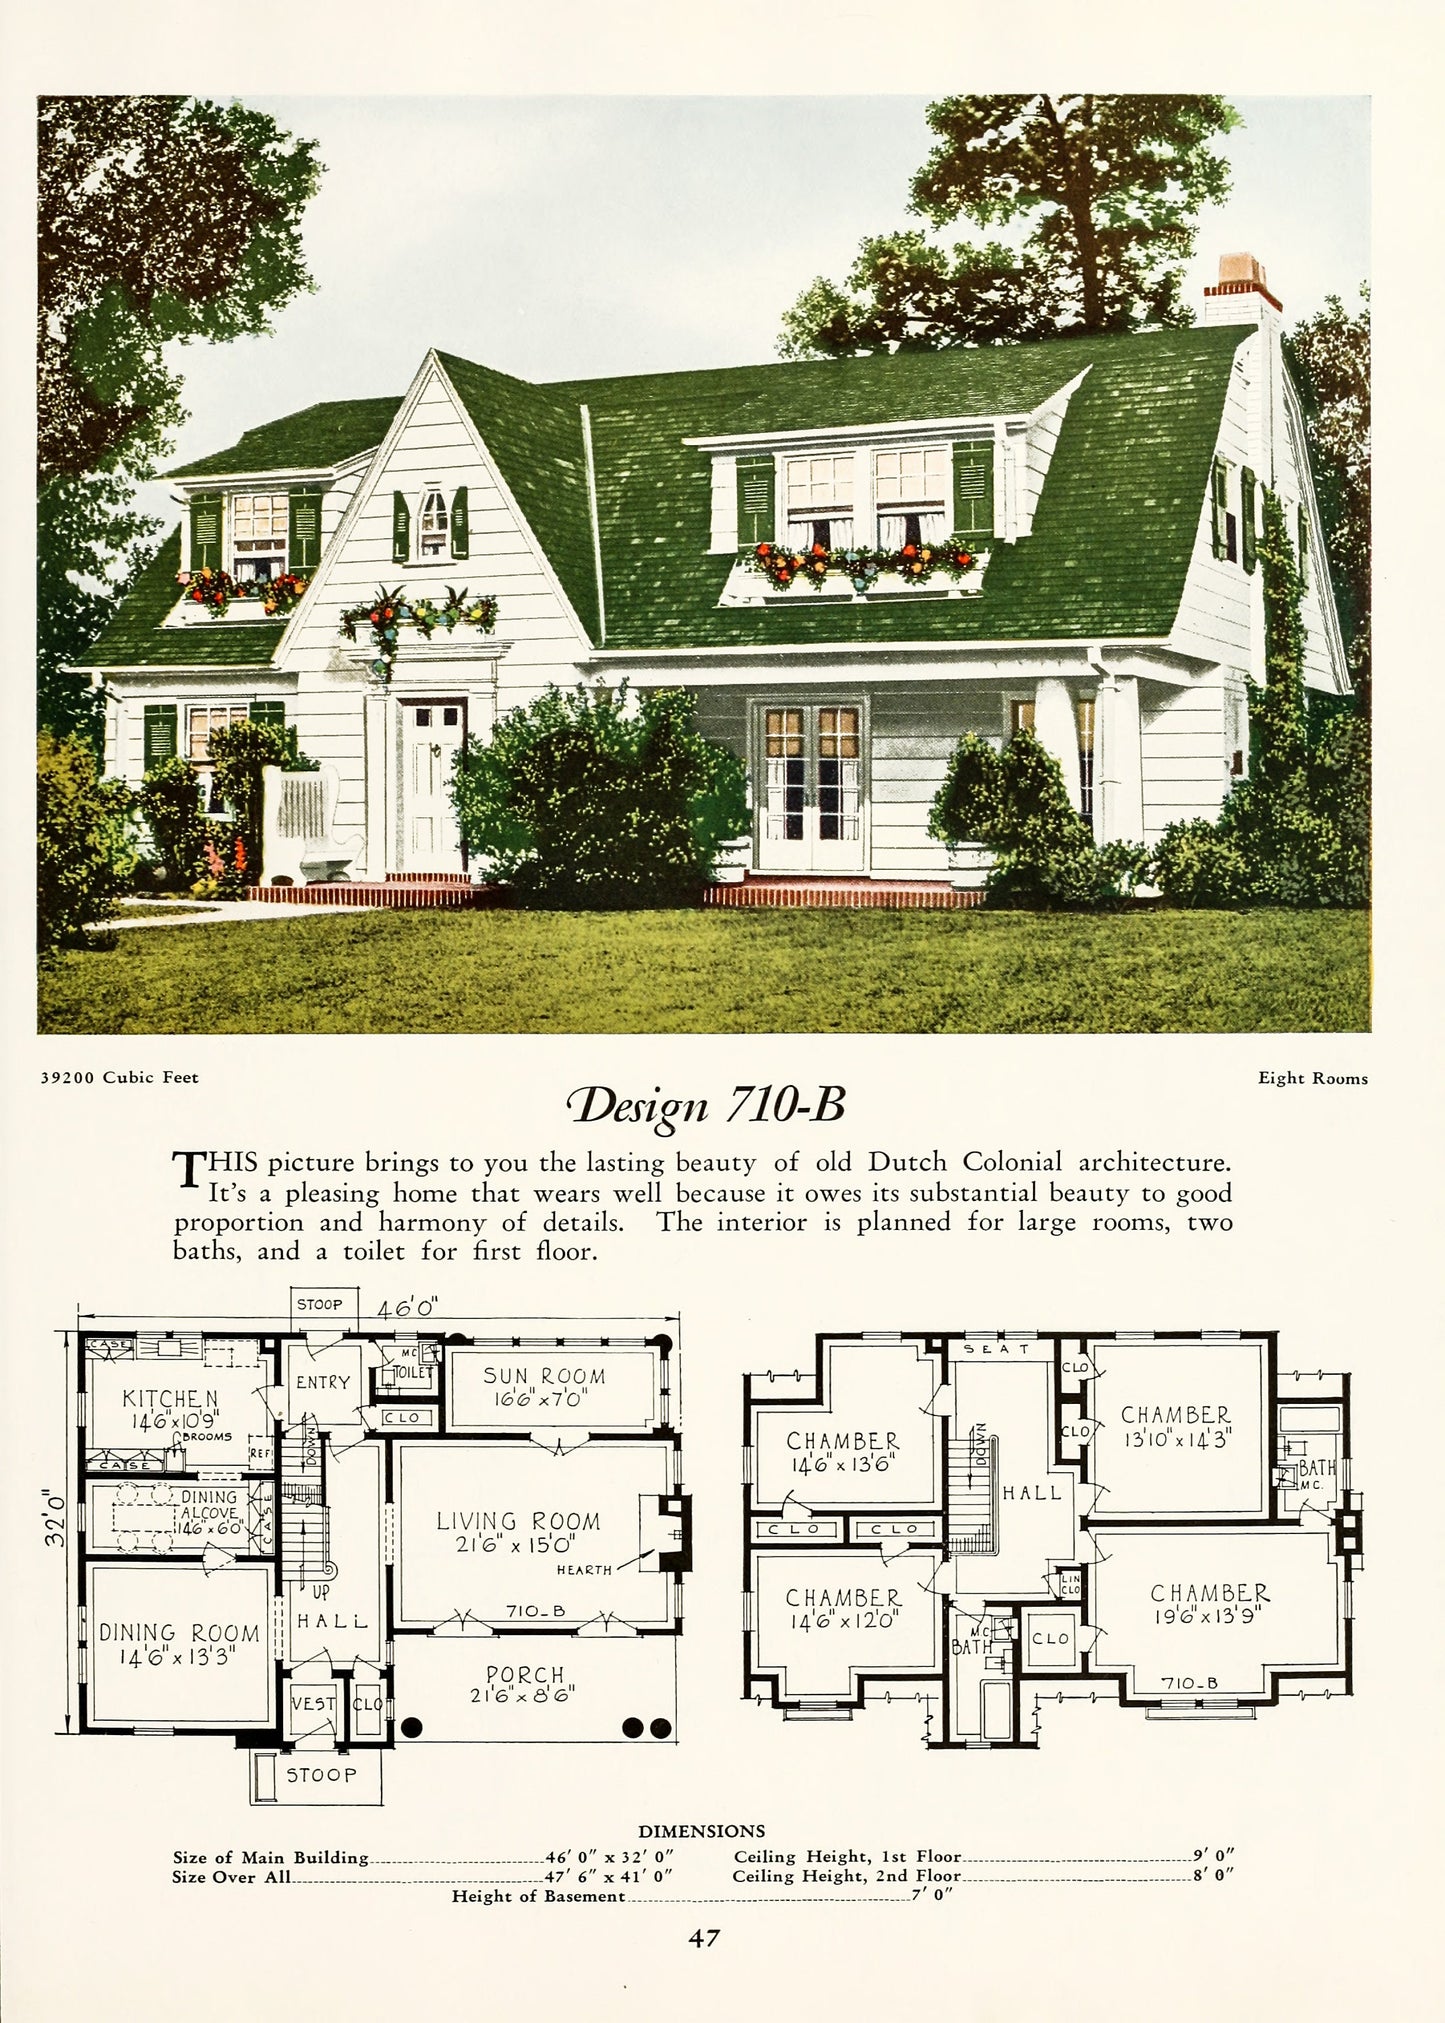 Modern American House Design Advertisements & Floor Plans Set 2 [40 Images]